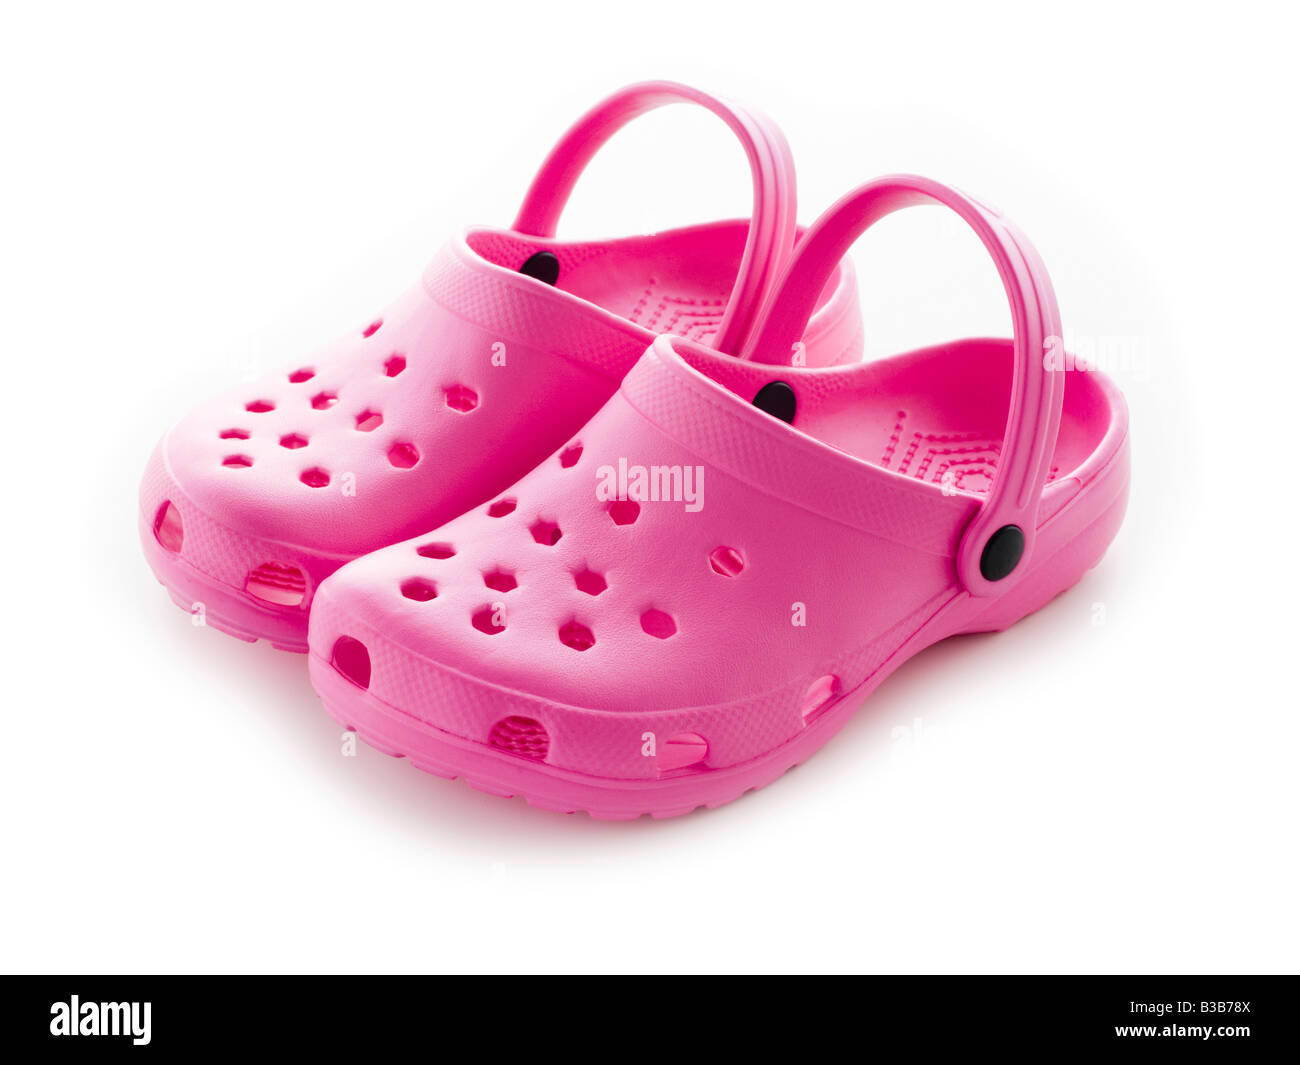 pink croc sandals